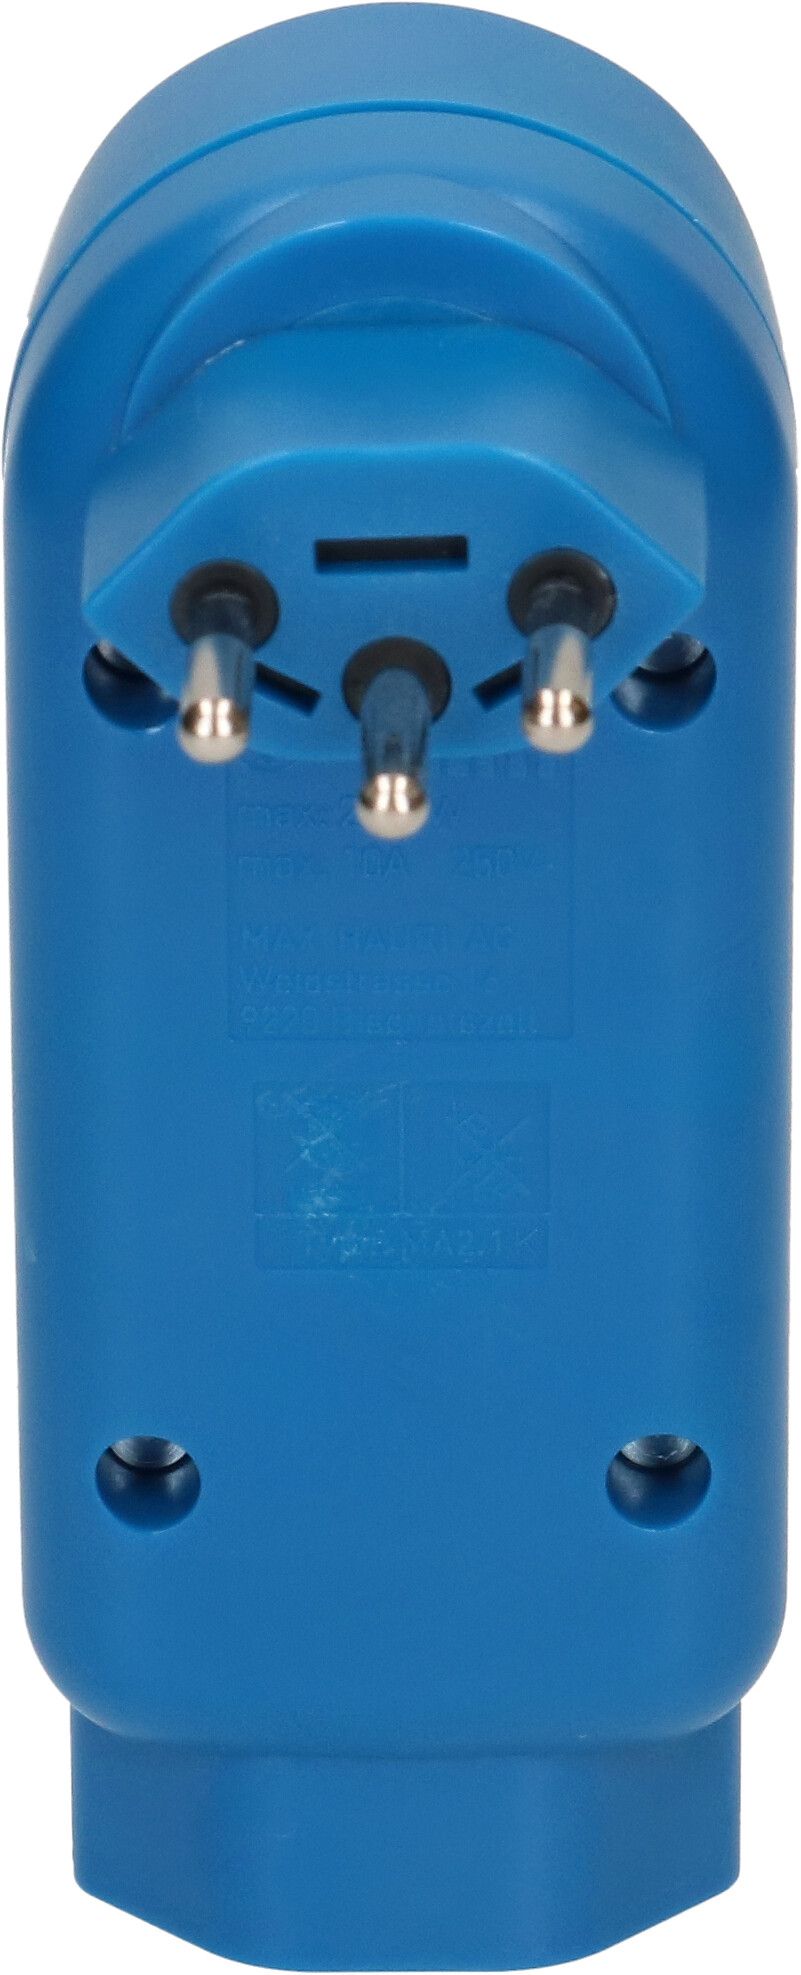 Adaptor 3x type 13 turnable blue